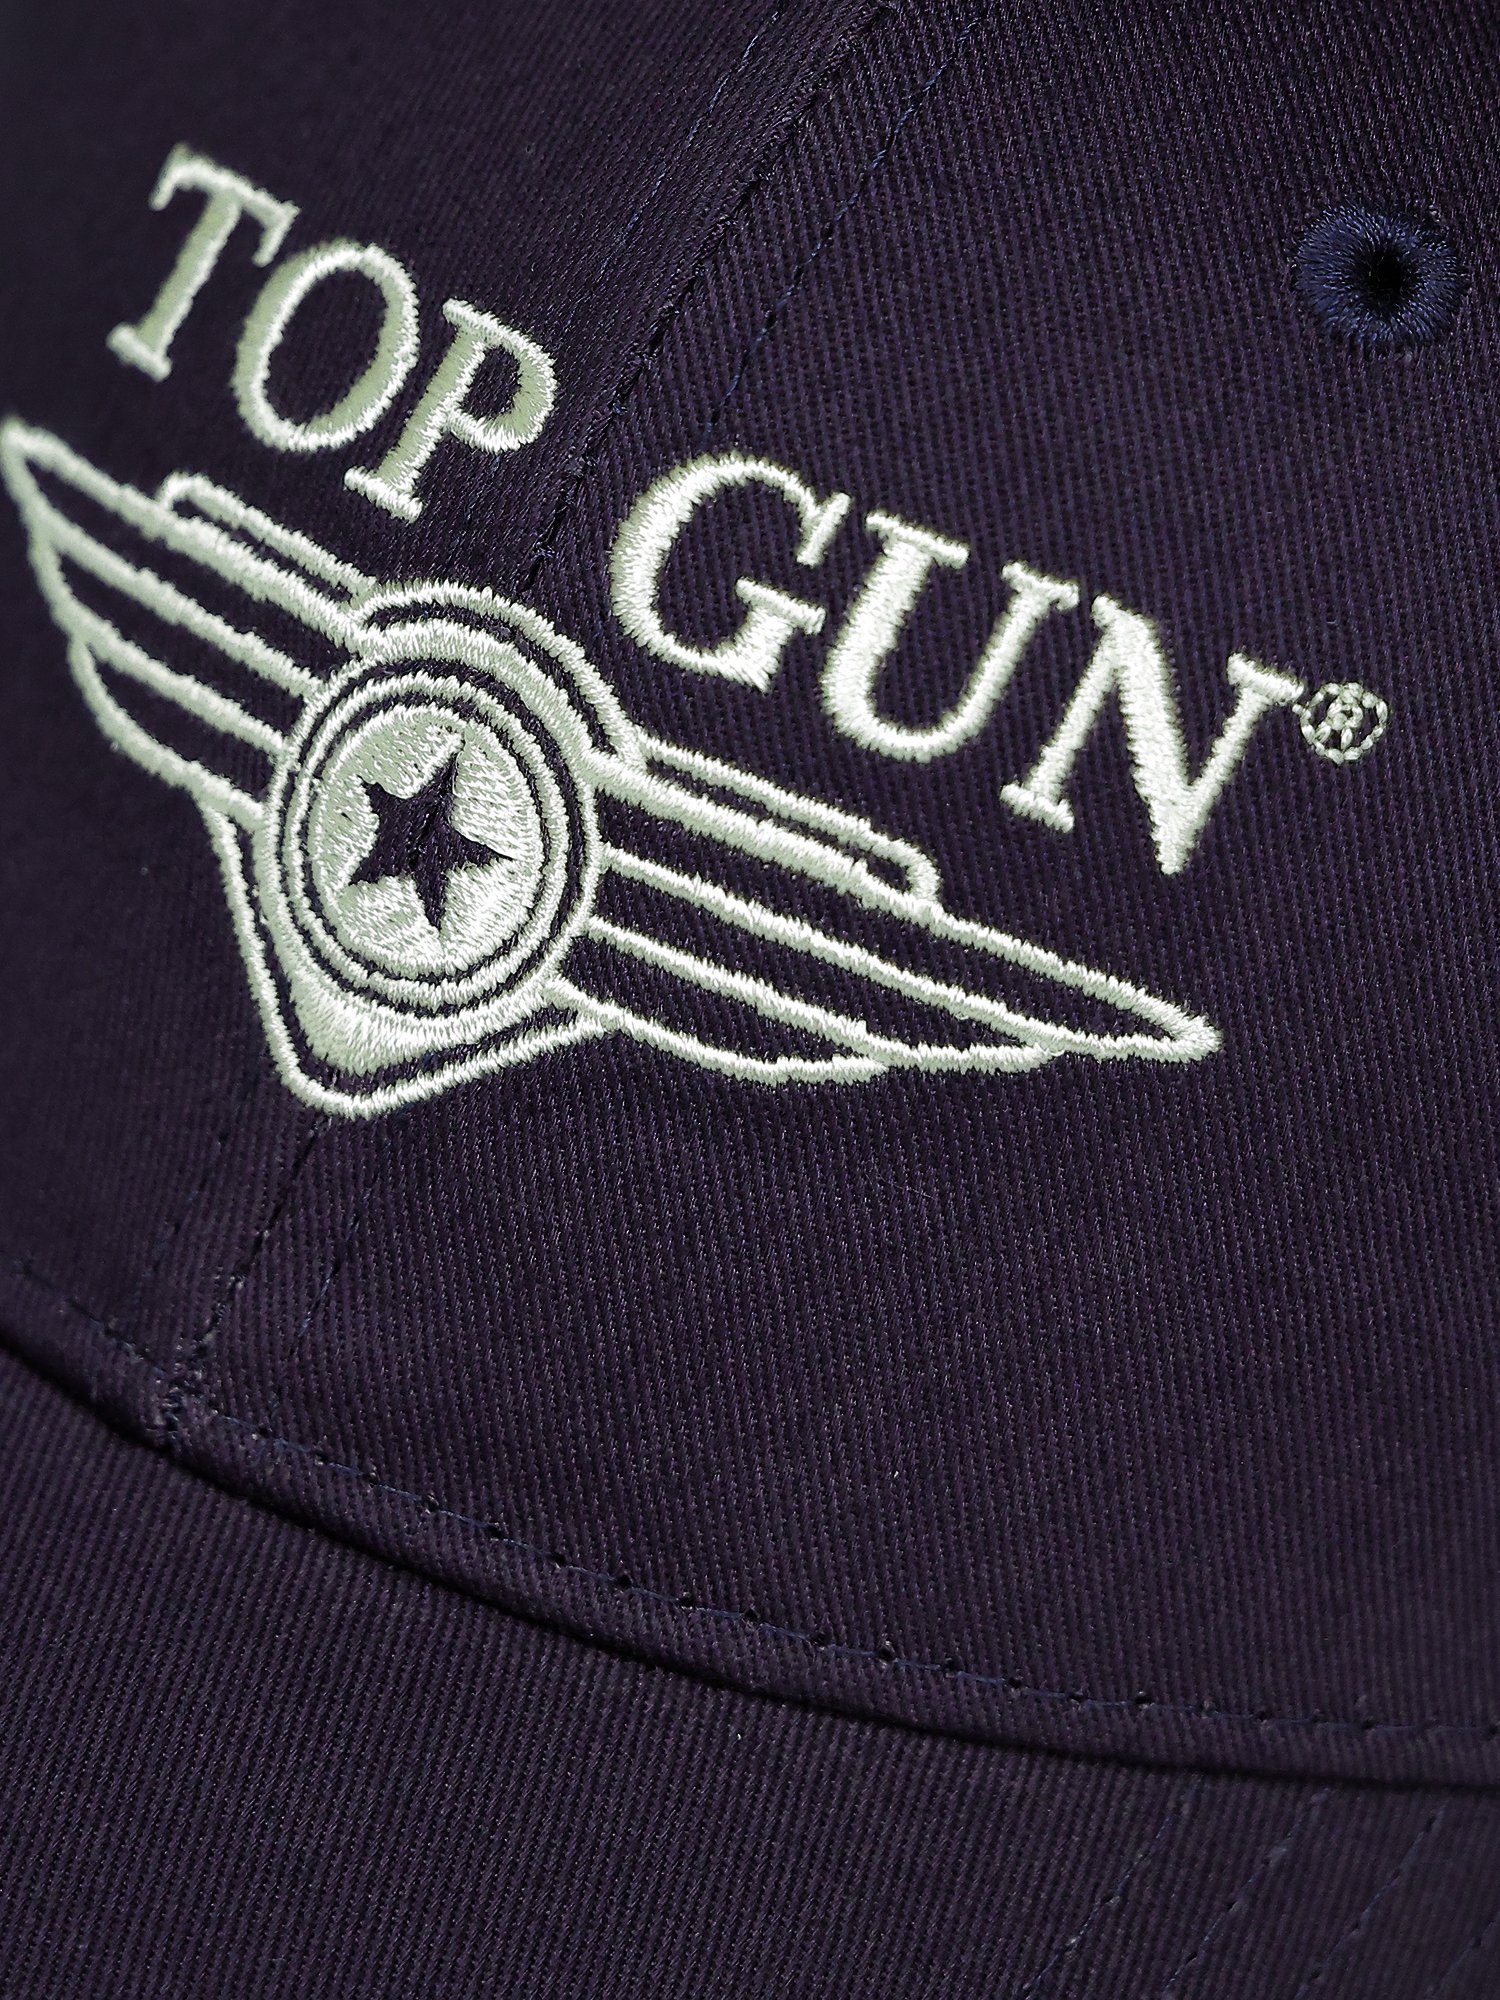 GUN TOP Snapback Cap navy TG22013